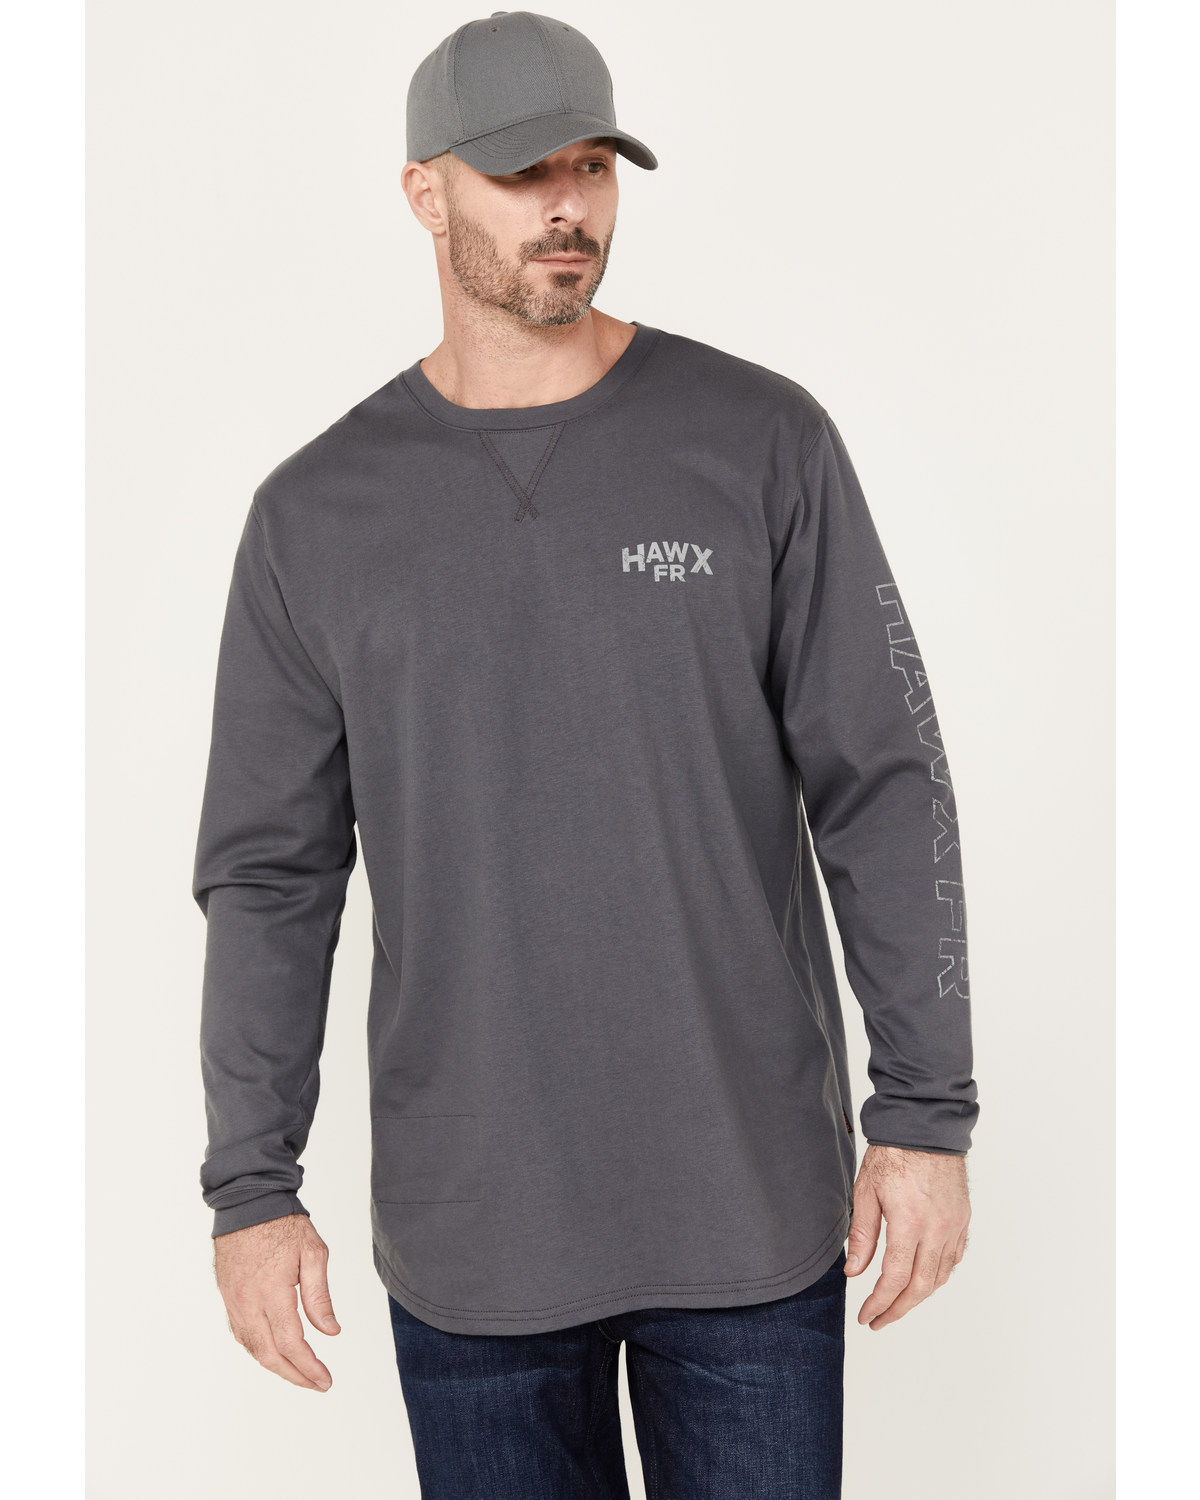 Hawx Men's FR Factory Graphic Long Sleeve Work Shirt